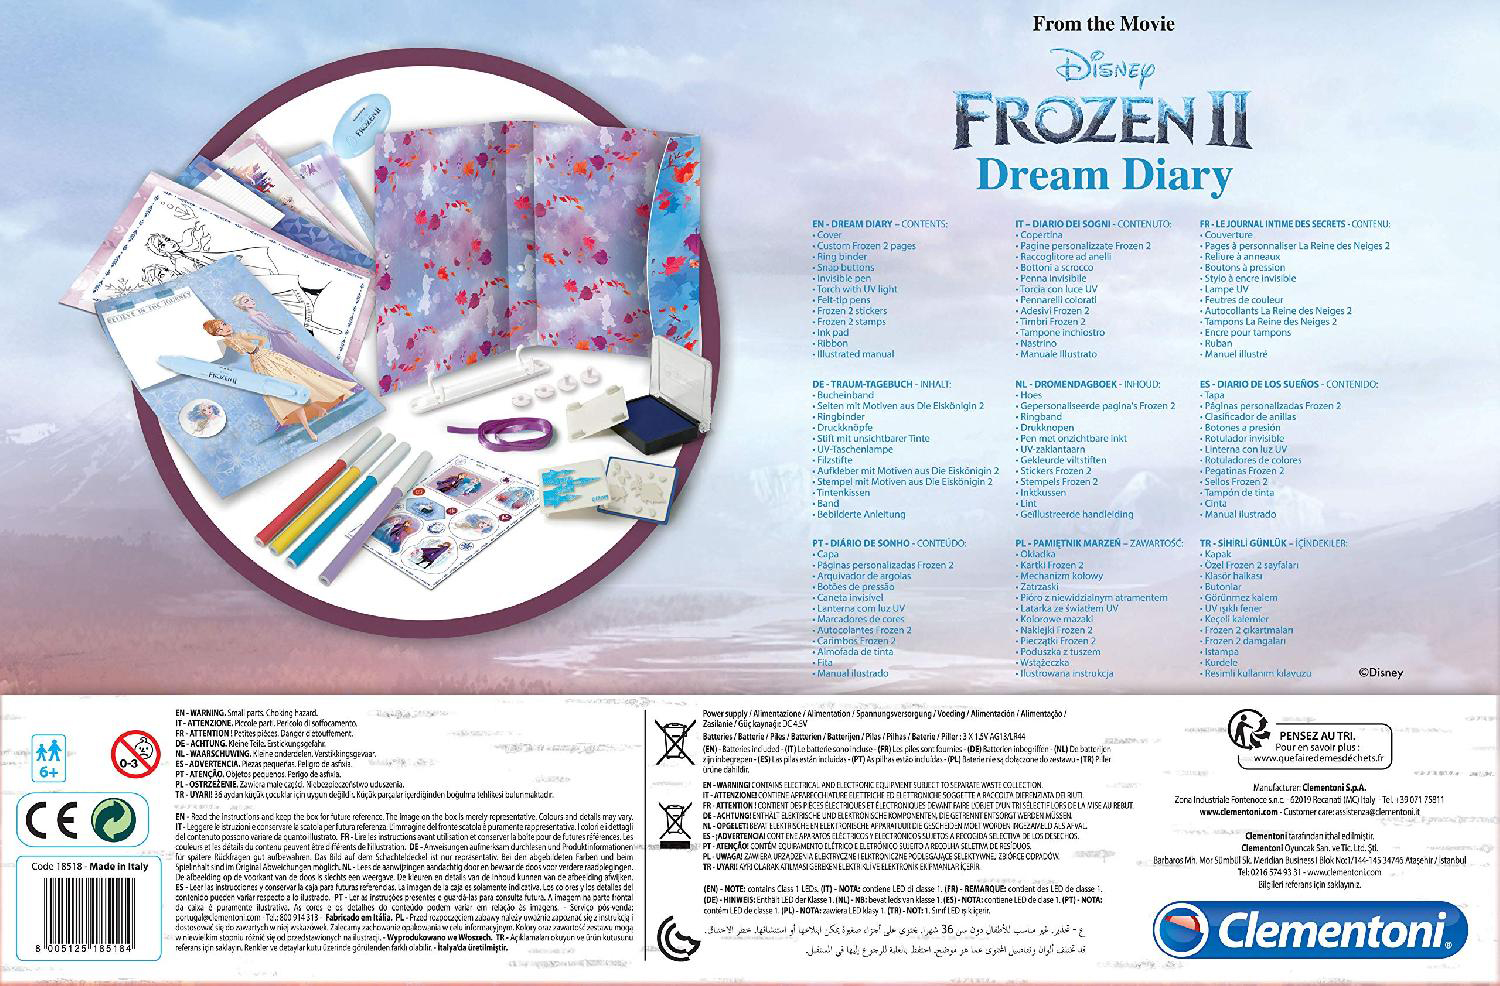 Clementoni 18518 Frozen 2 Dream Diary